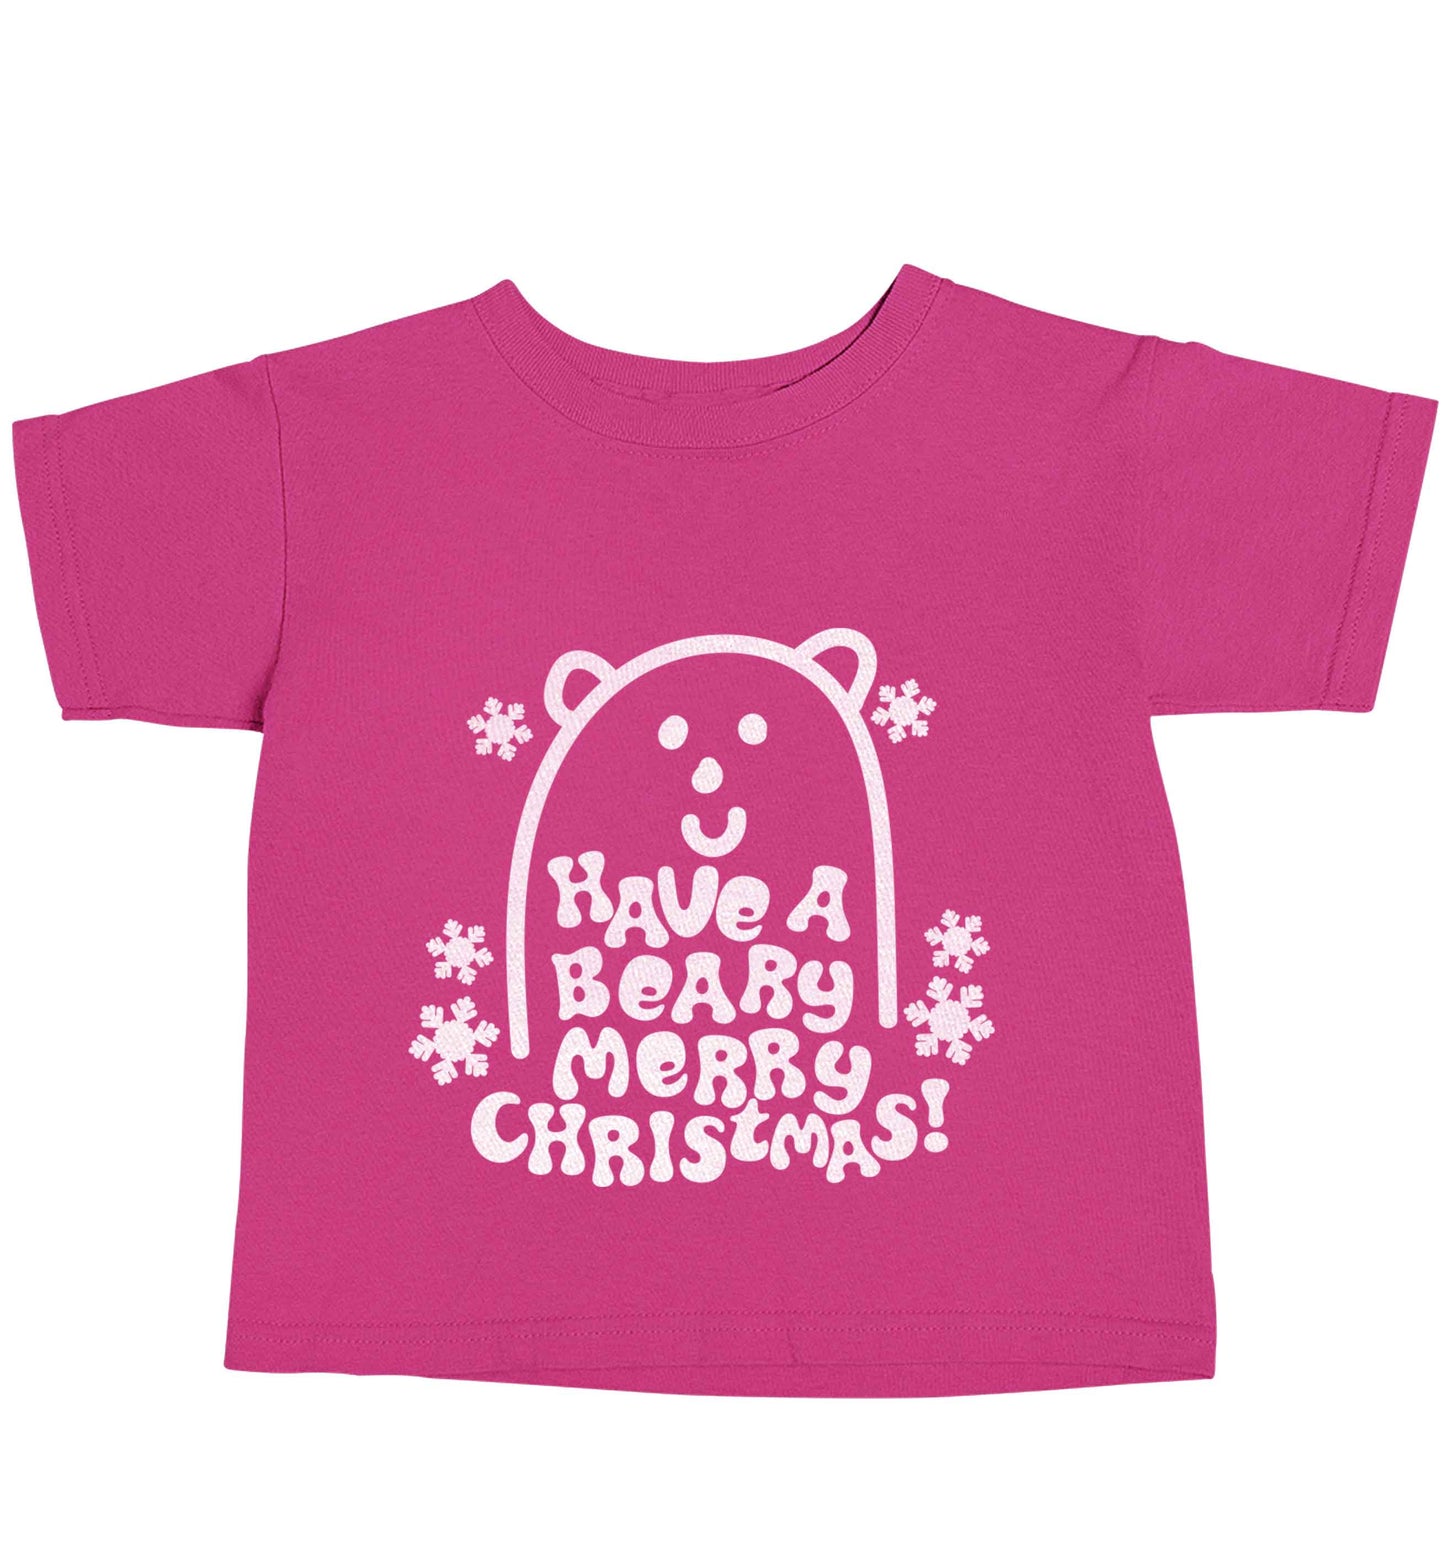 Save The Polar Bears pink baby toddler Tshirt 2 Years